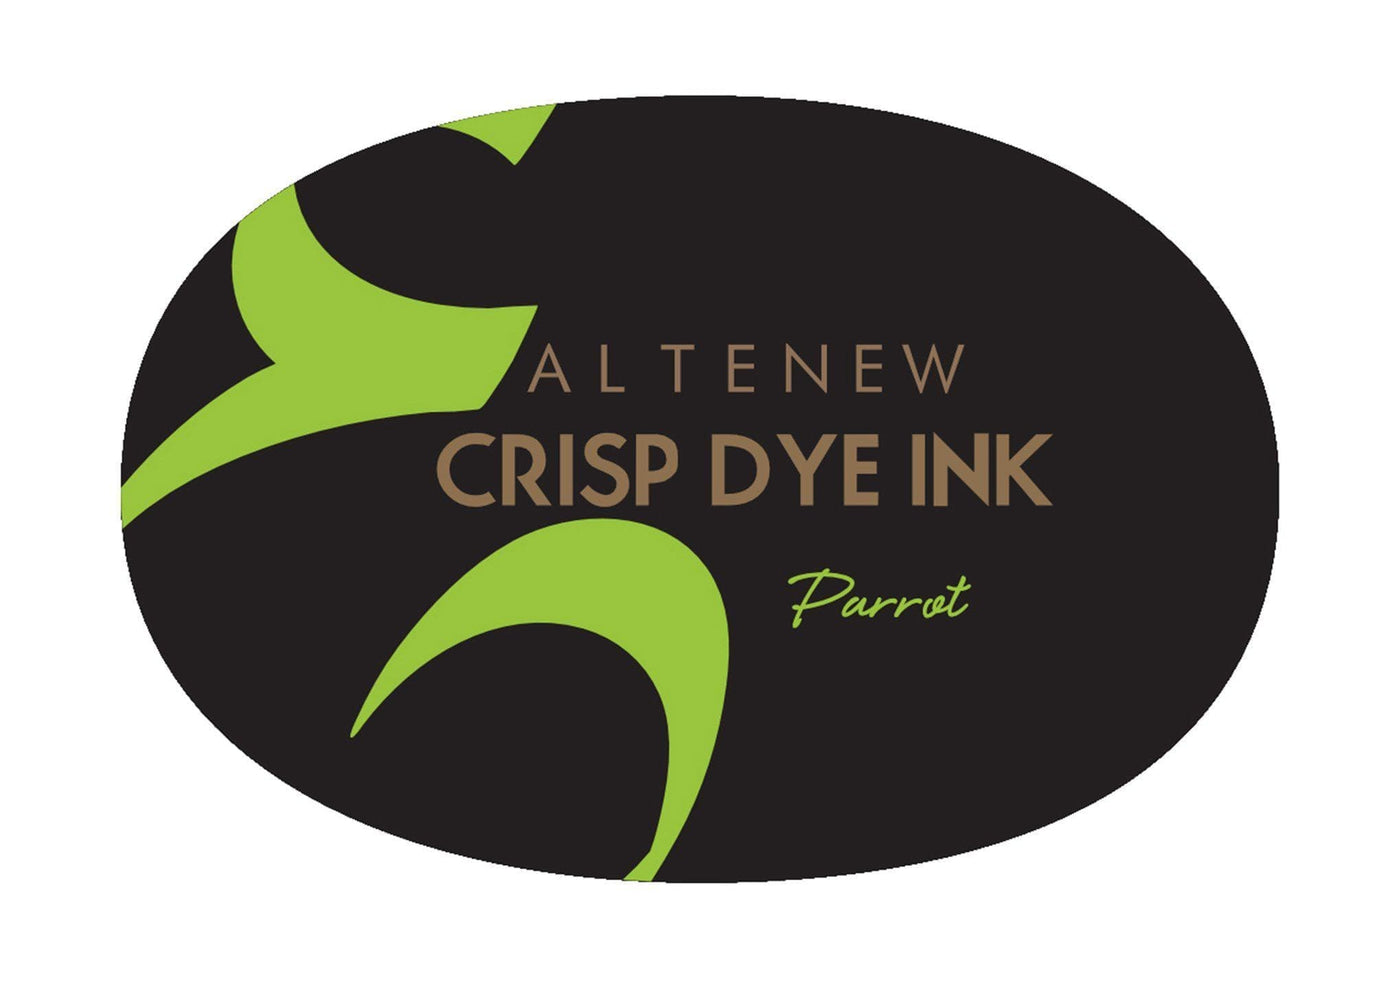 Stewart Superior Inks Parrot Crisp Dye Ink